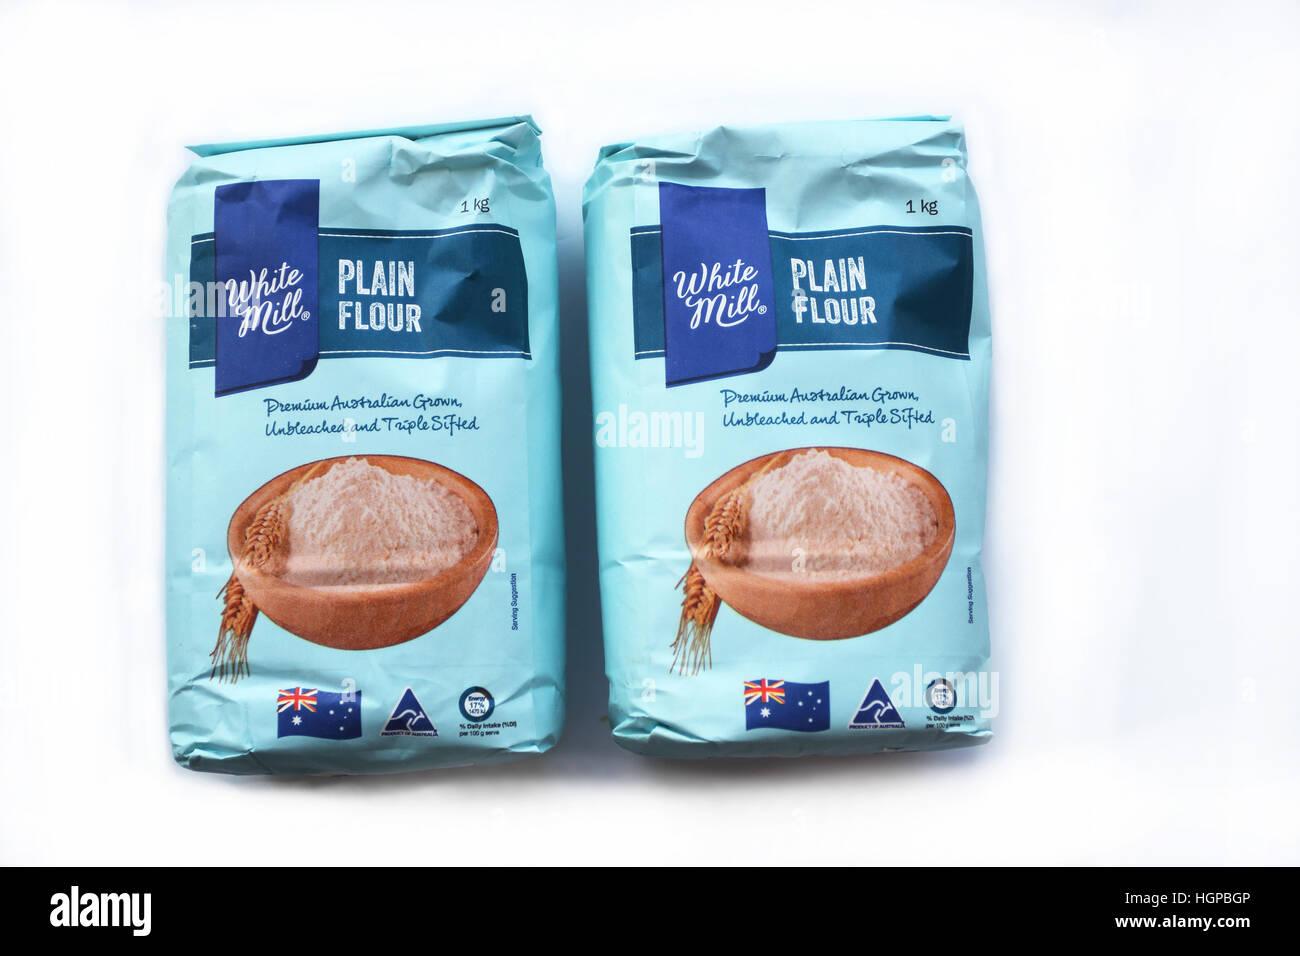 Aldi Australia White Flour isolated against white background Stock Photo